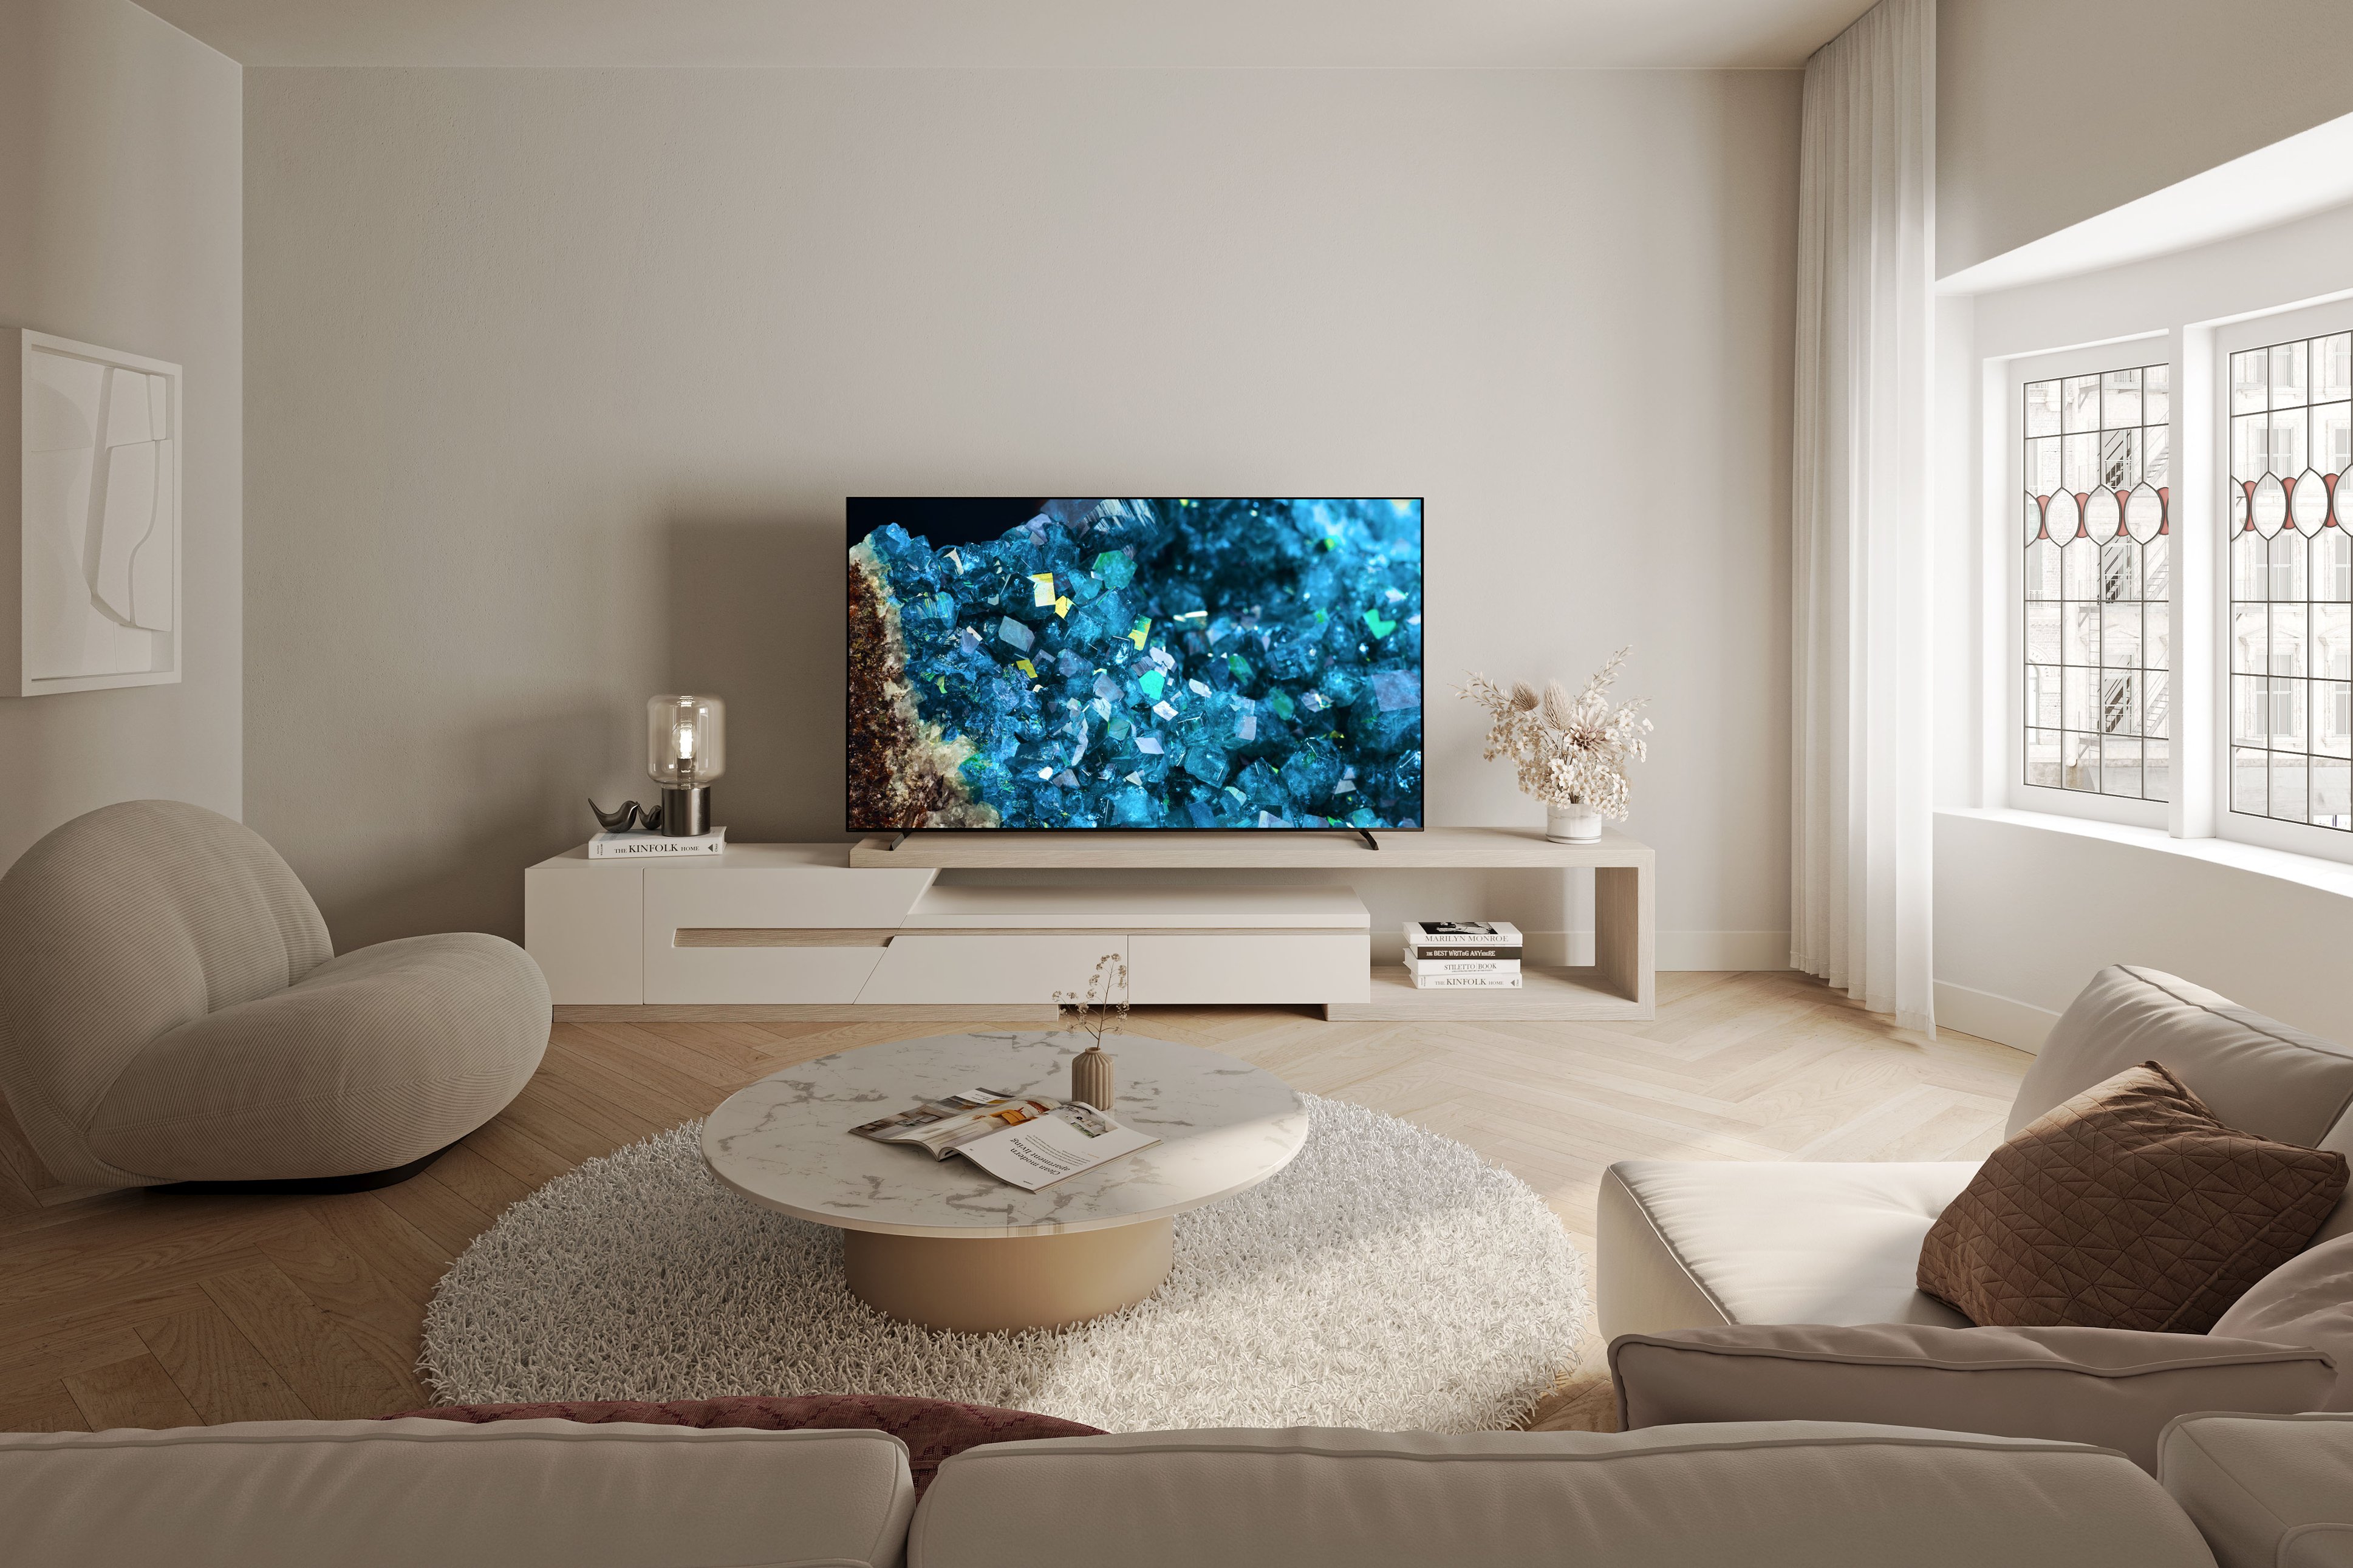 Pantalla Smart TV Sony OLED de 65 pulgadas 4 K XR-65A80L con Google TV